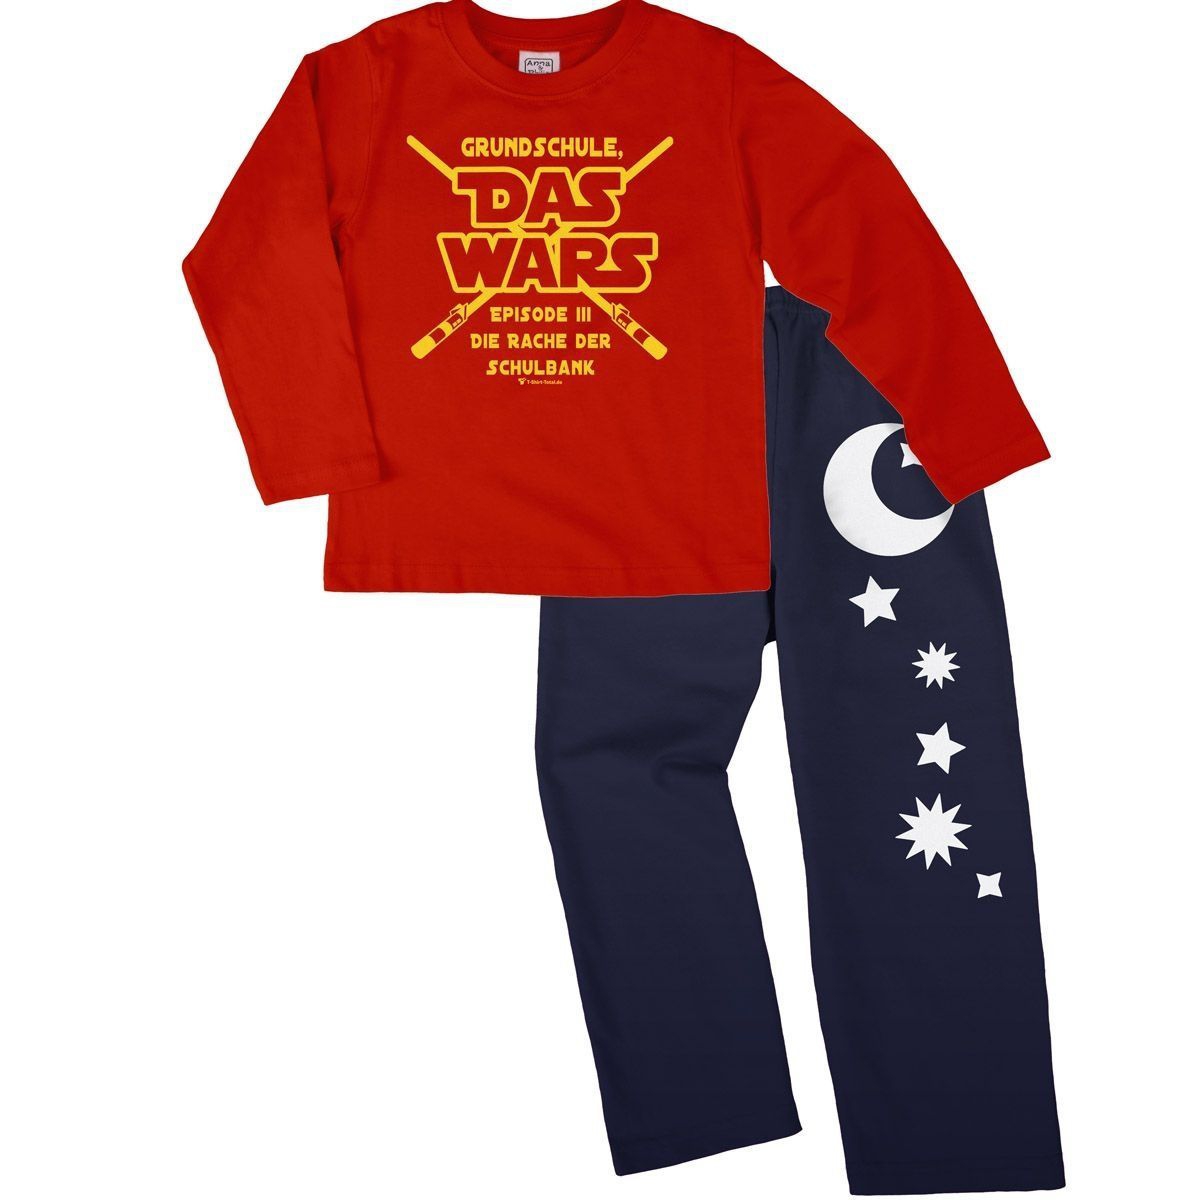 Das wars Grundschule Pyjama Set rot / navy 134 / 140